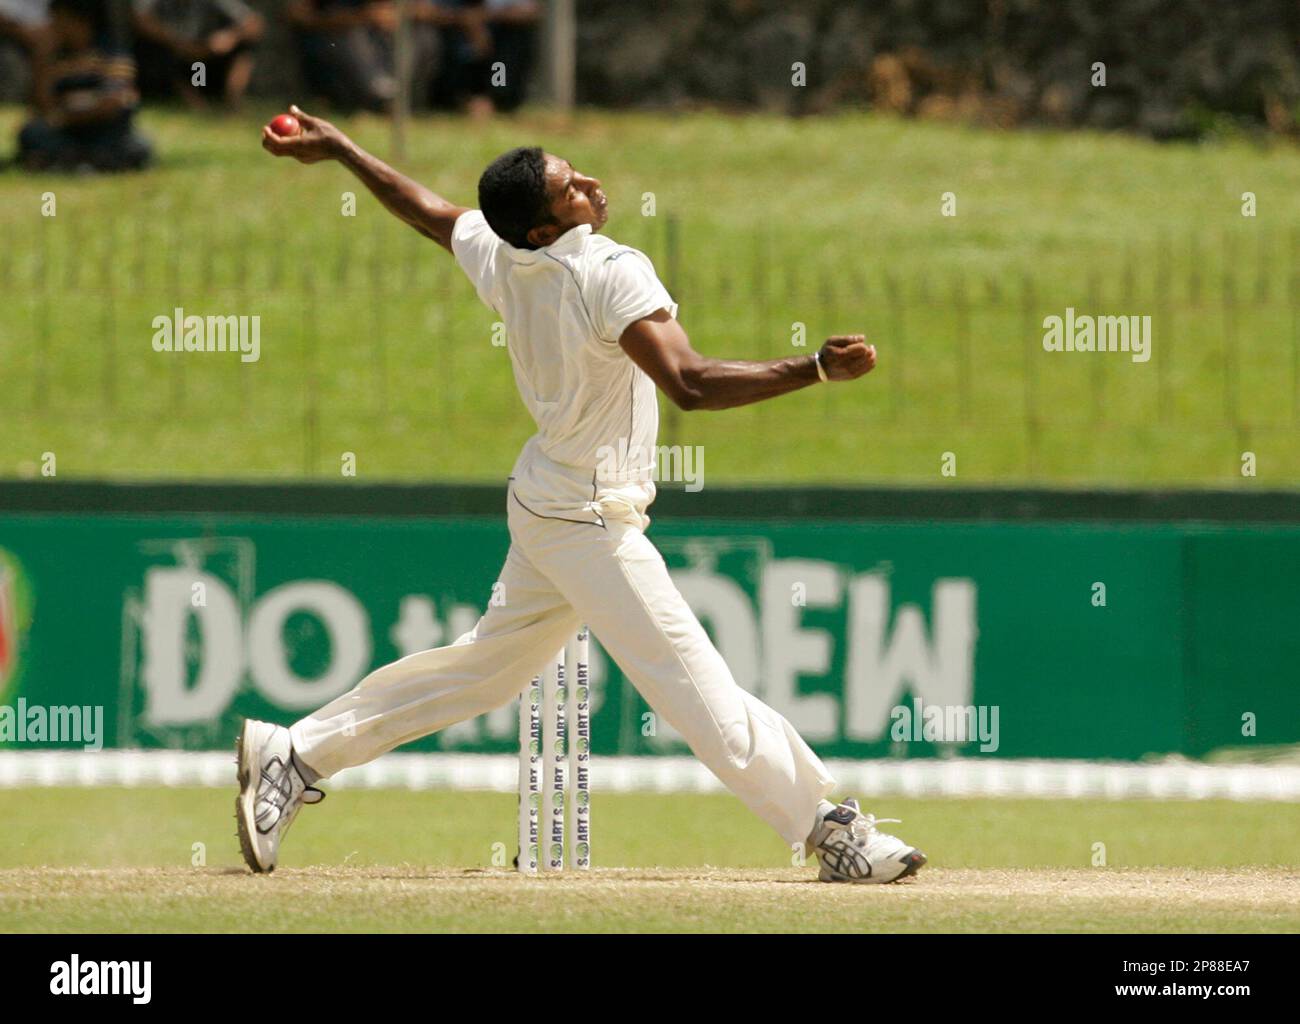 Sri Lankan bowler Chaminda Vaas bowls during the third day's play of the final test cricket match between Sri Lanka and Pakistan in Colombo, Sri Lanka, Wednesday, July 22, 2009. (AP Photo/Eranga Jayawardena) Stock Photo